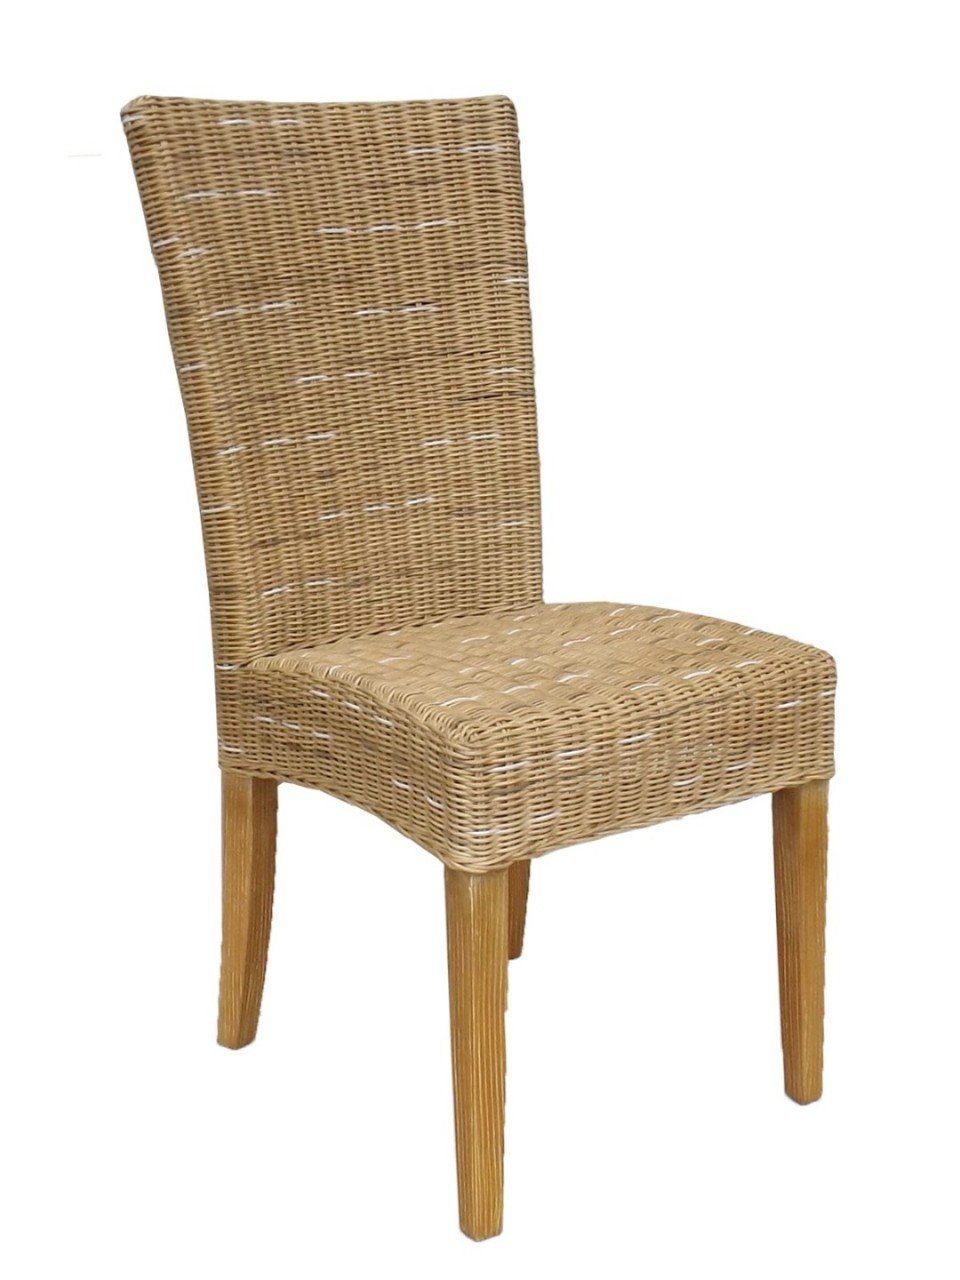 Stück Sessel Sitzki, Soma Rattanstühle mit/ohne Stühle Esszimmer Set Sitzplatz Cardine Stuhl 6 Sitzmöbel soma Sessel